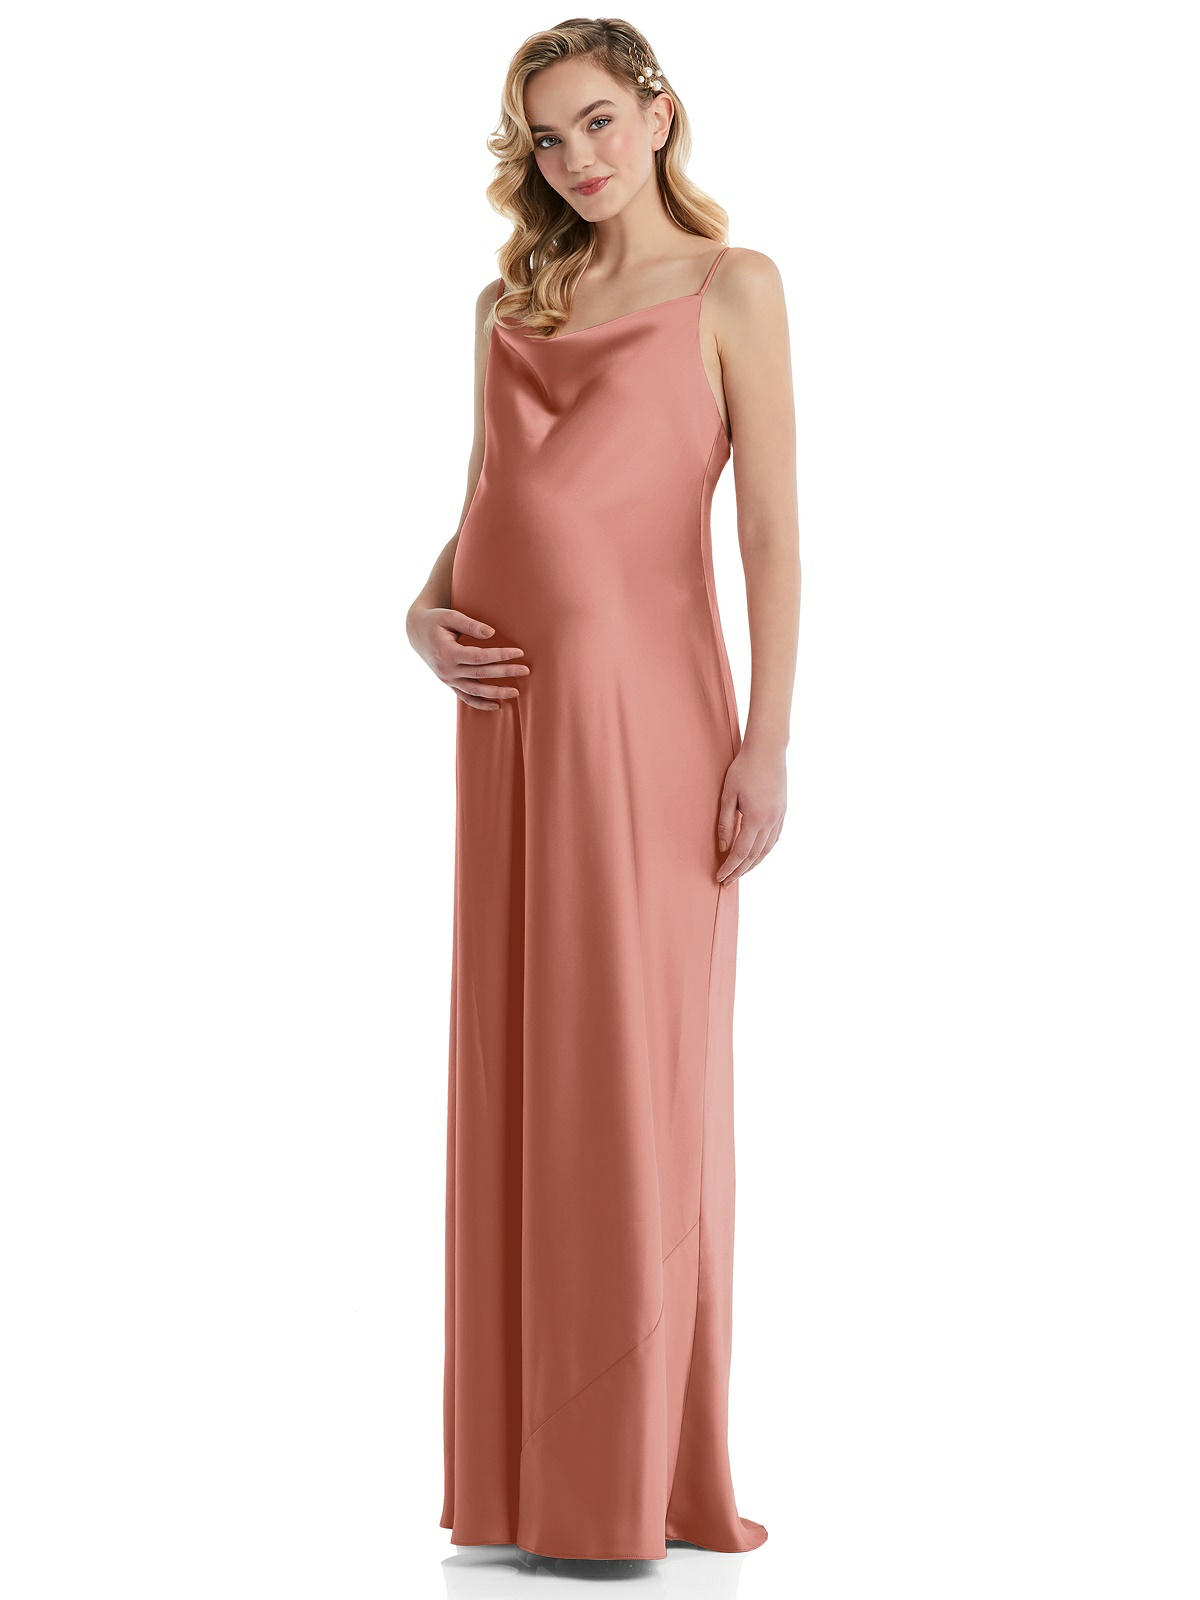 Gracie Maternity Bridesmaid Dress by Dessy – Desert Rose